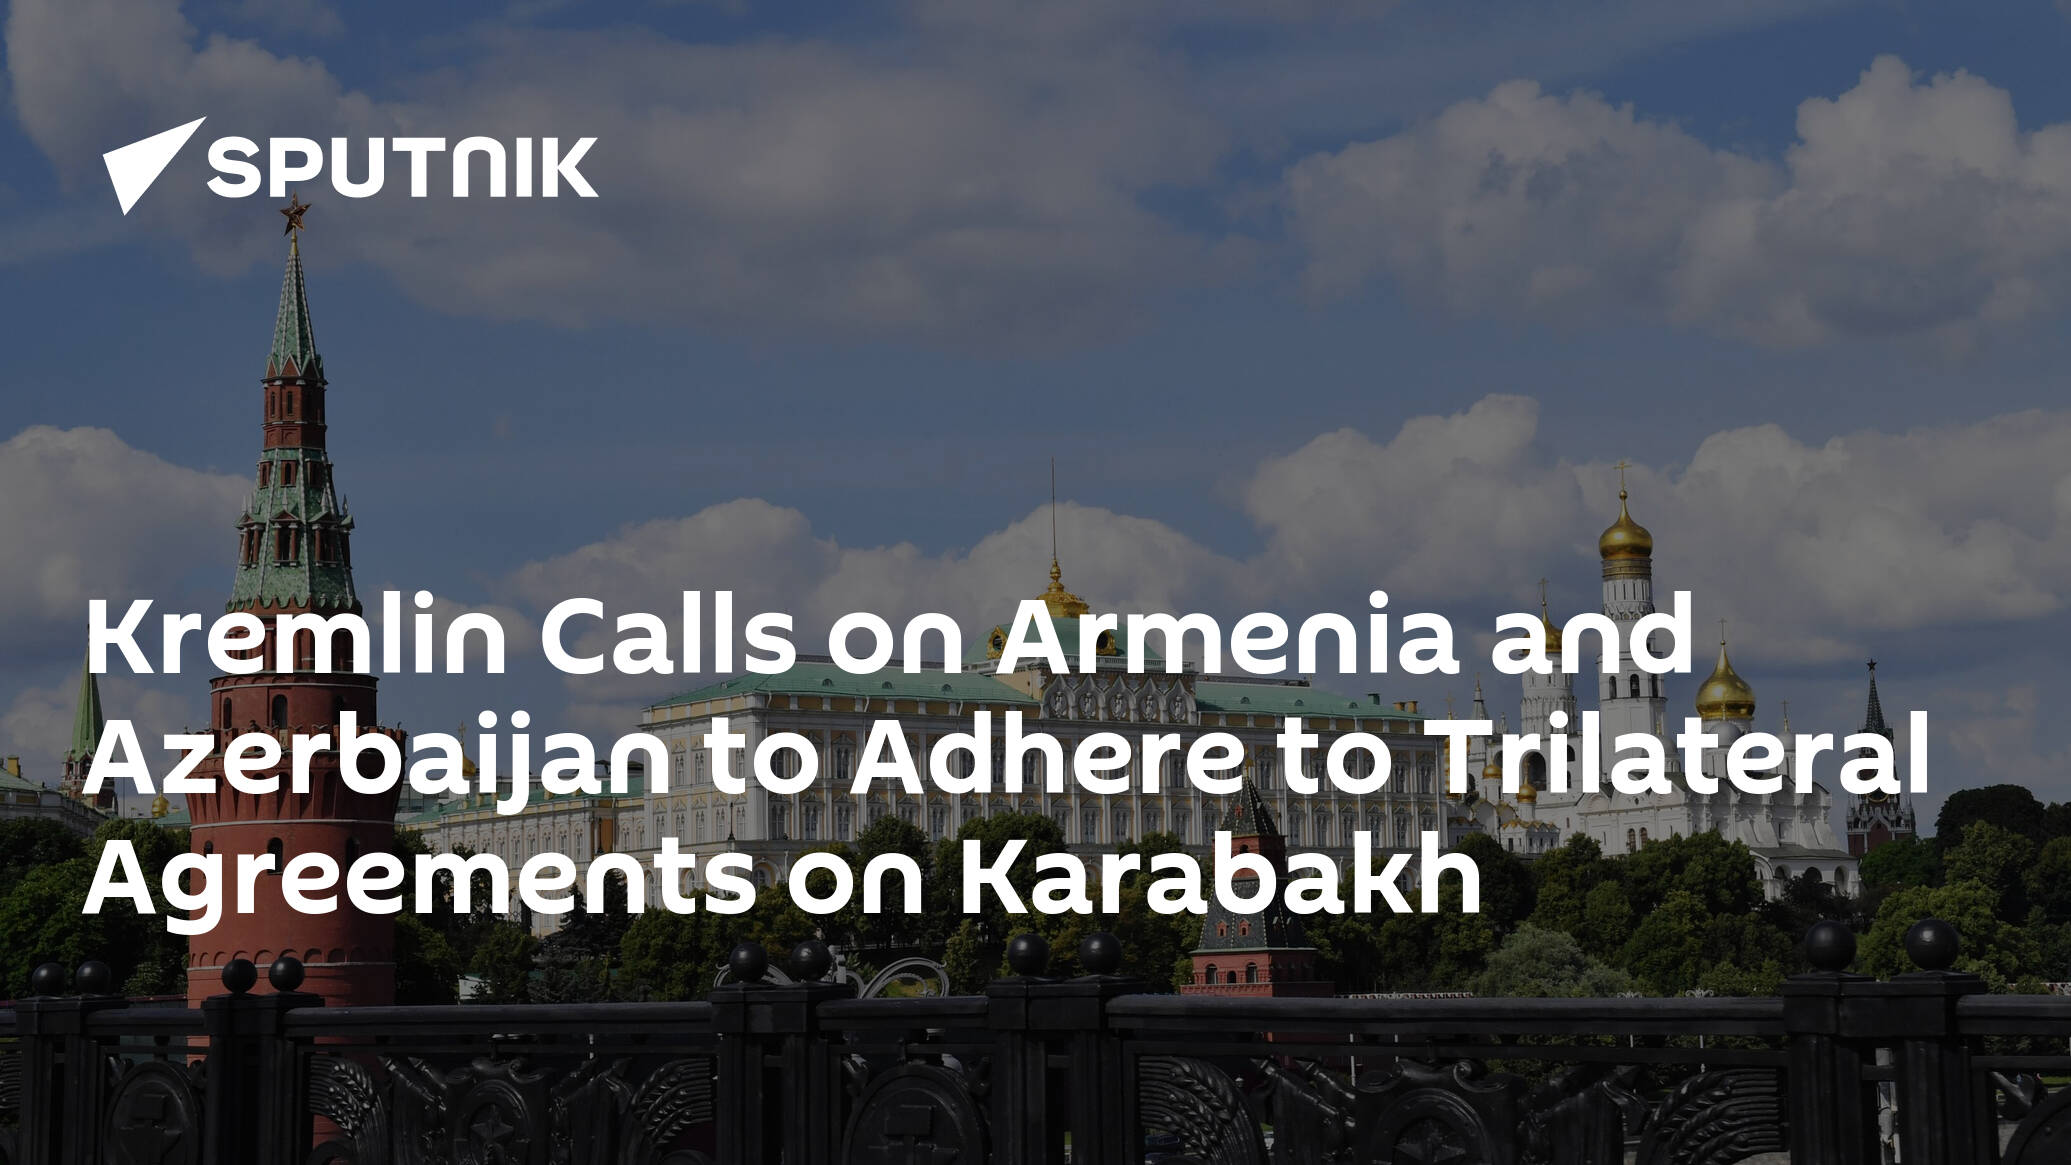 Kremlin Calls on Armenia and Azerbaijan to Adhere to Trilateral Agreements on Karabakh